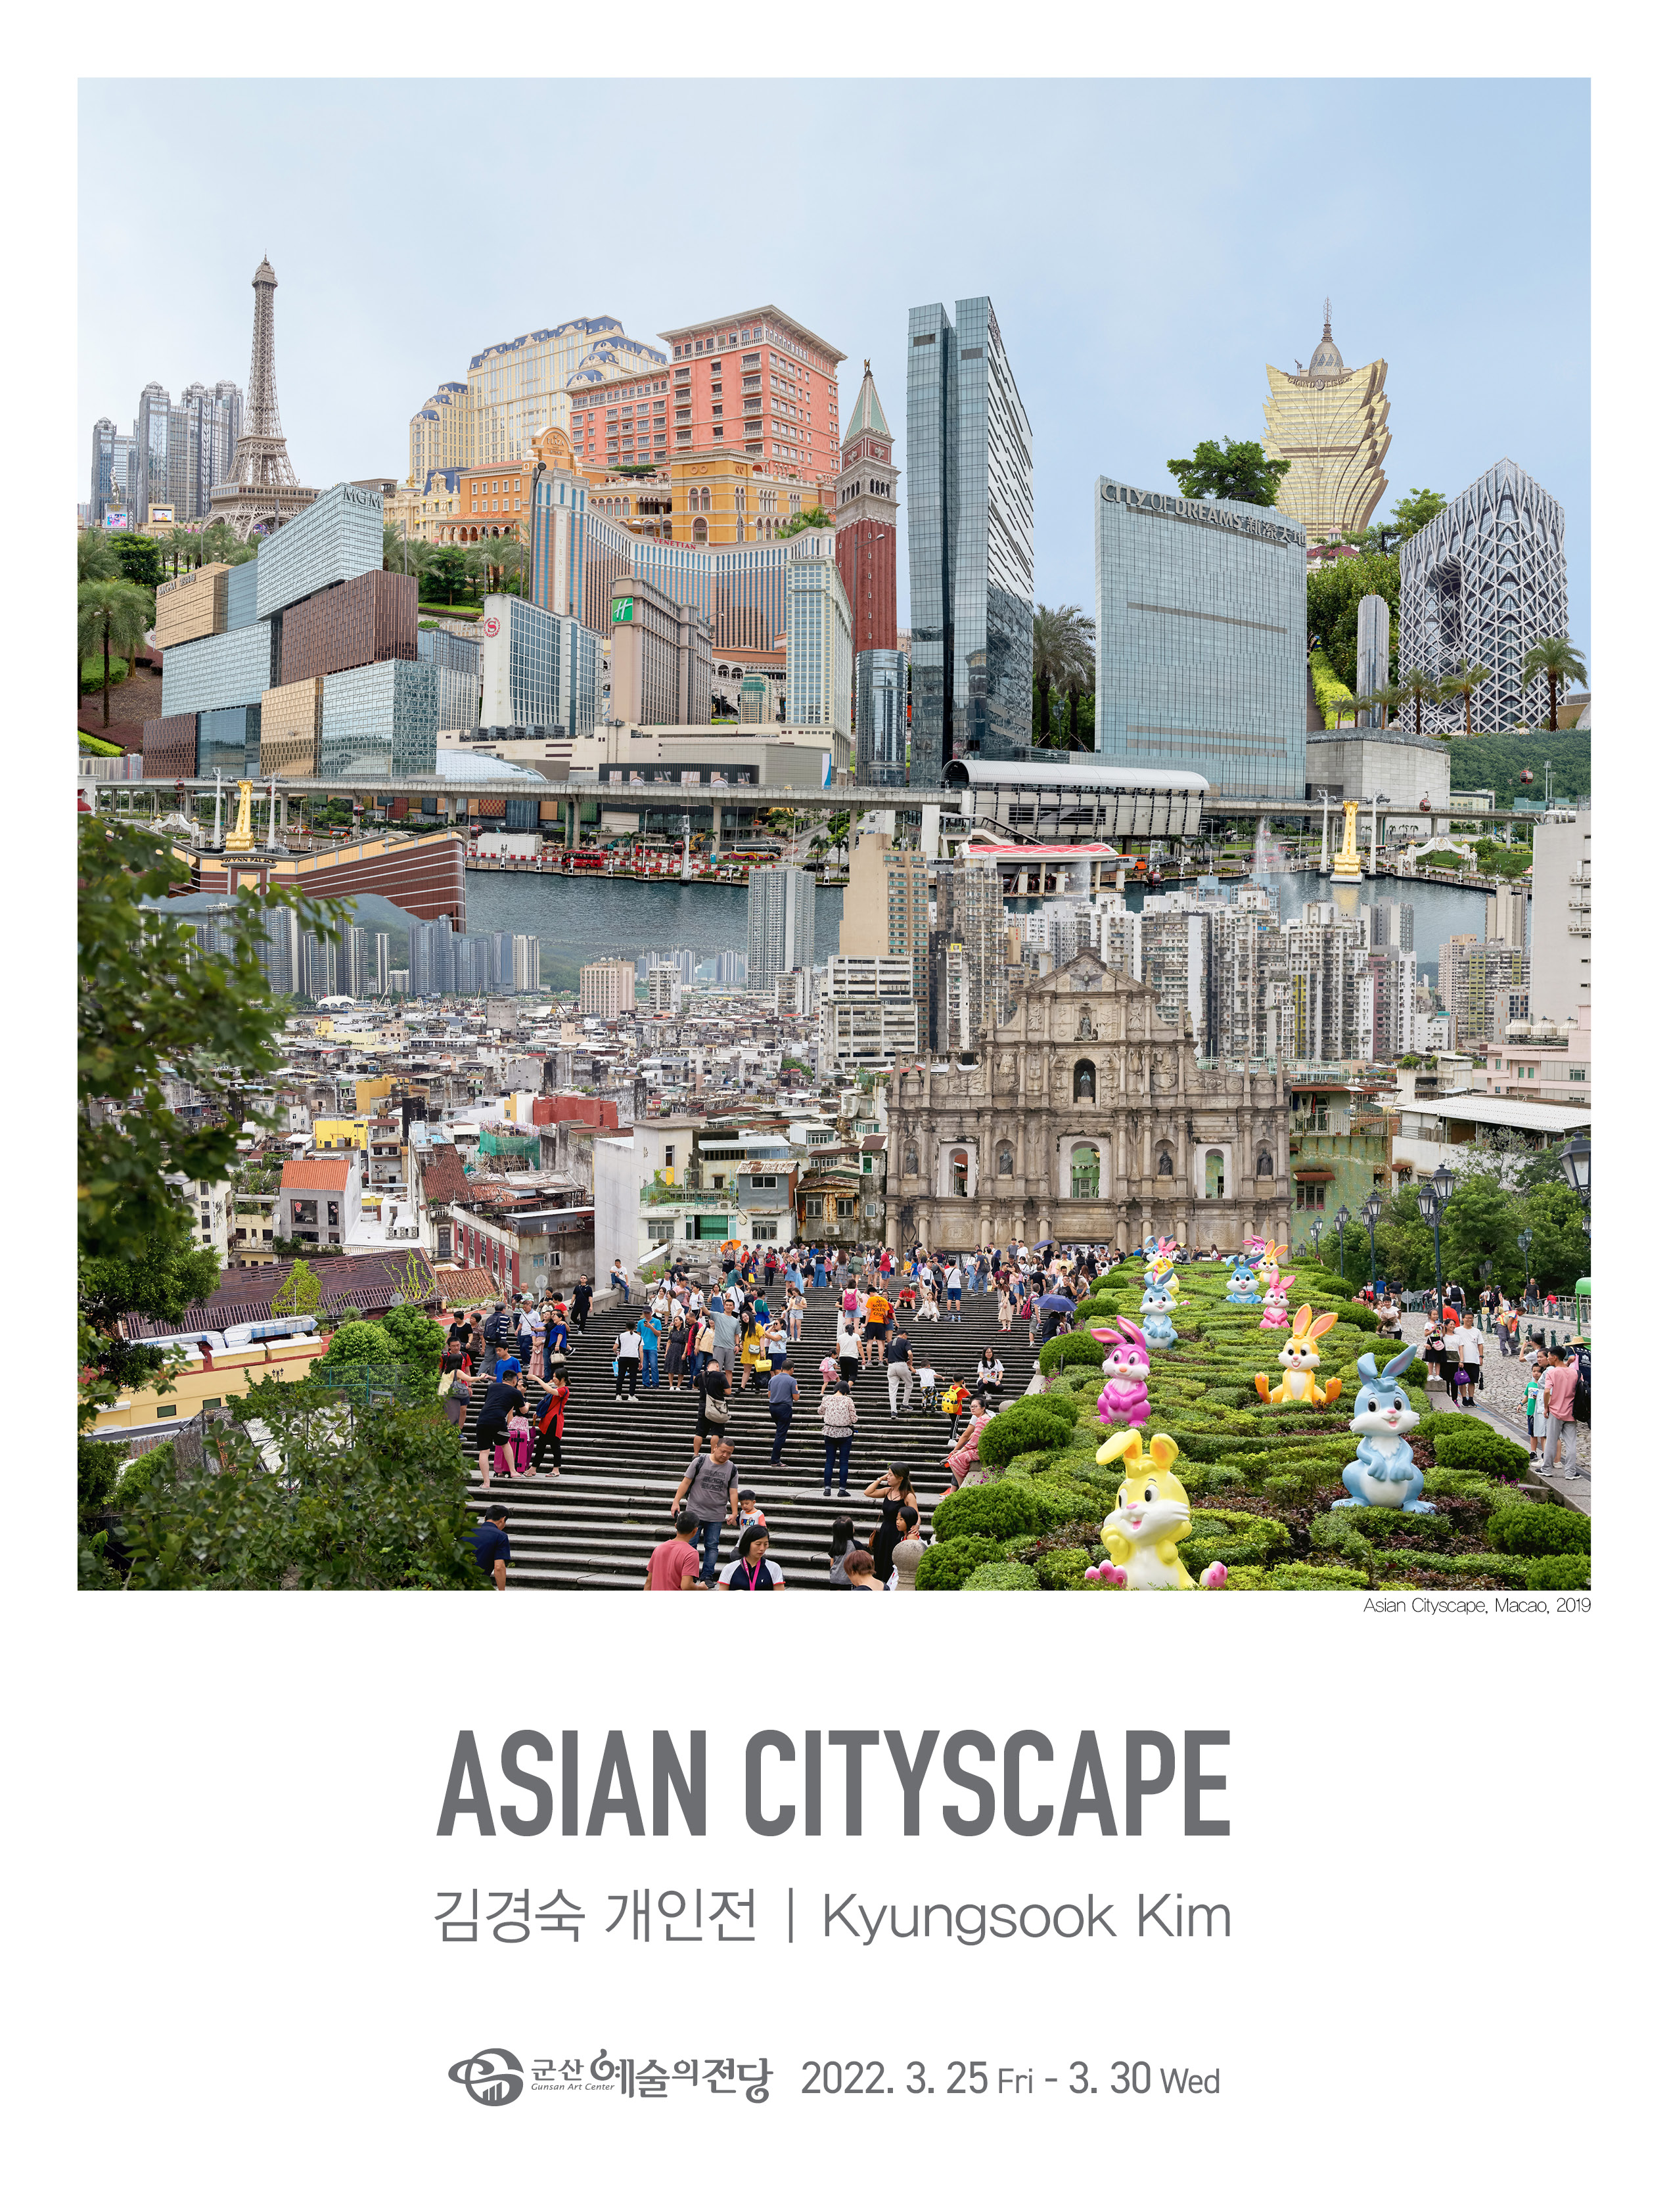 Asian Cityscape